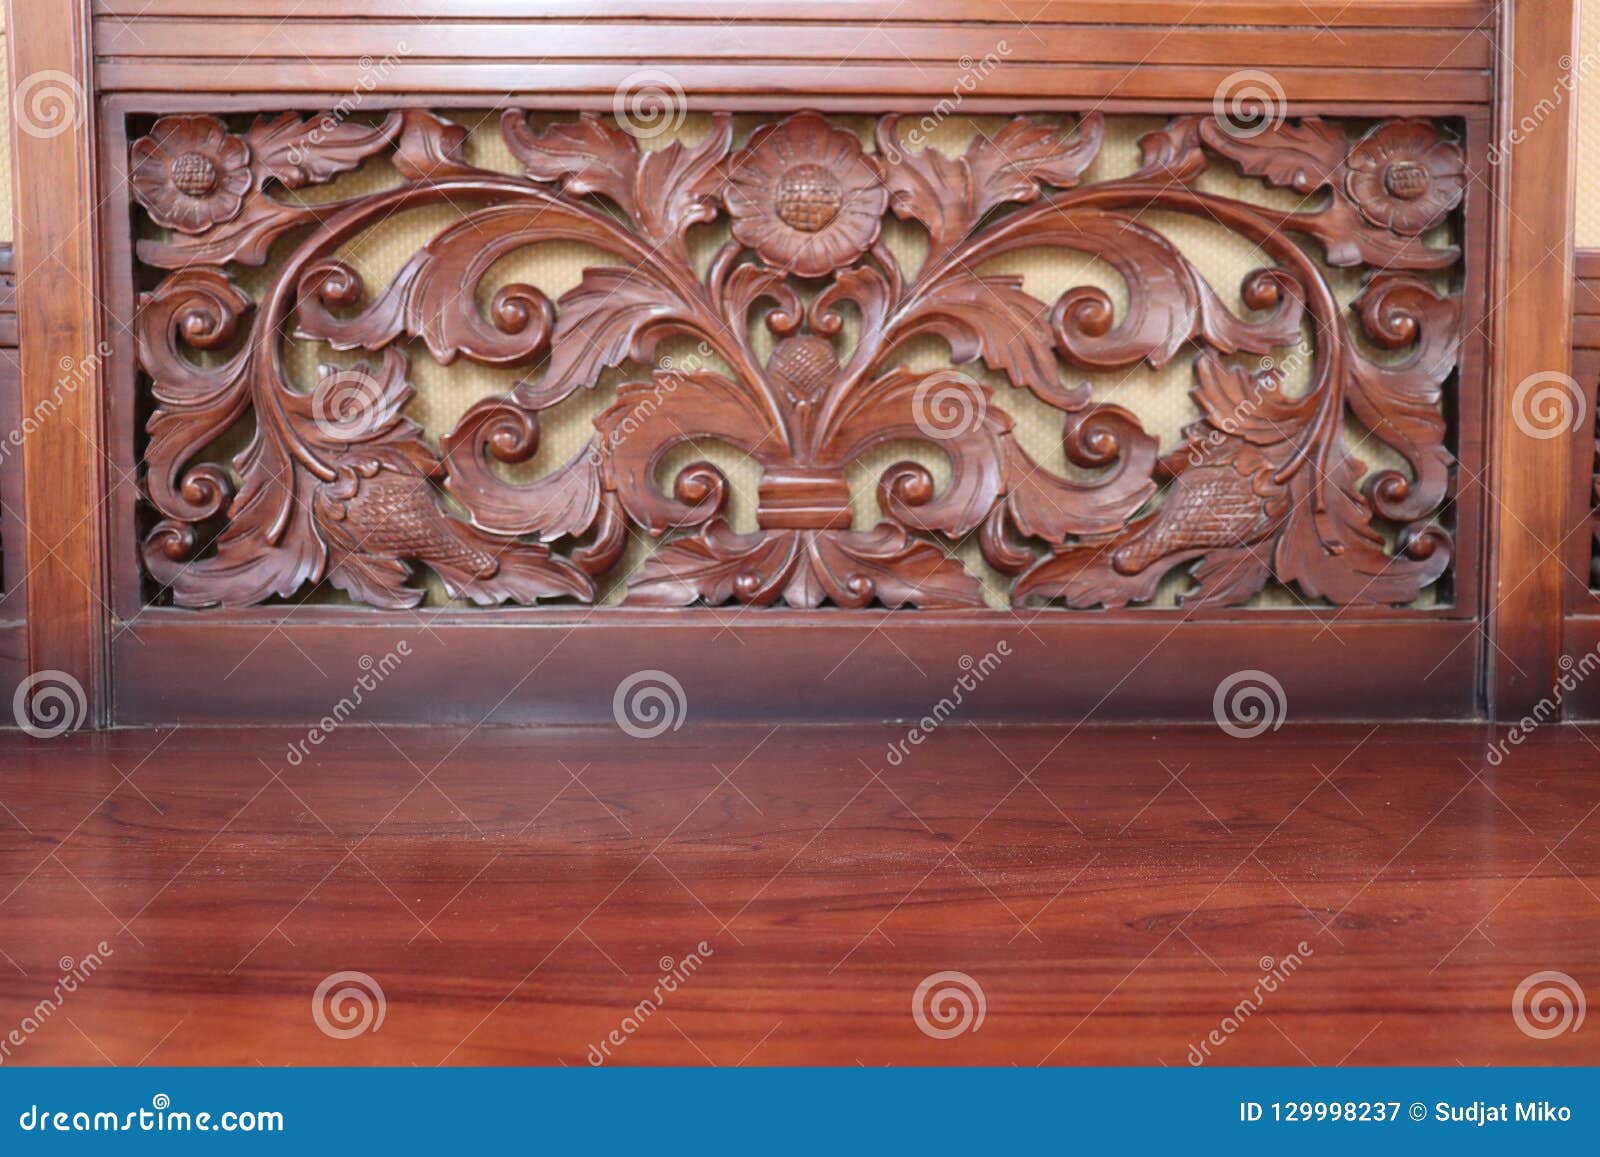 Wood Carving, Indonesian Javanese Wood Carvings, Wood Carving Art, Stock Image - Image of